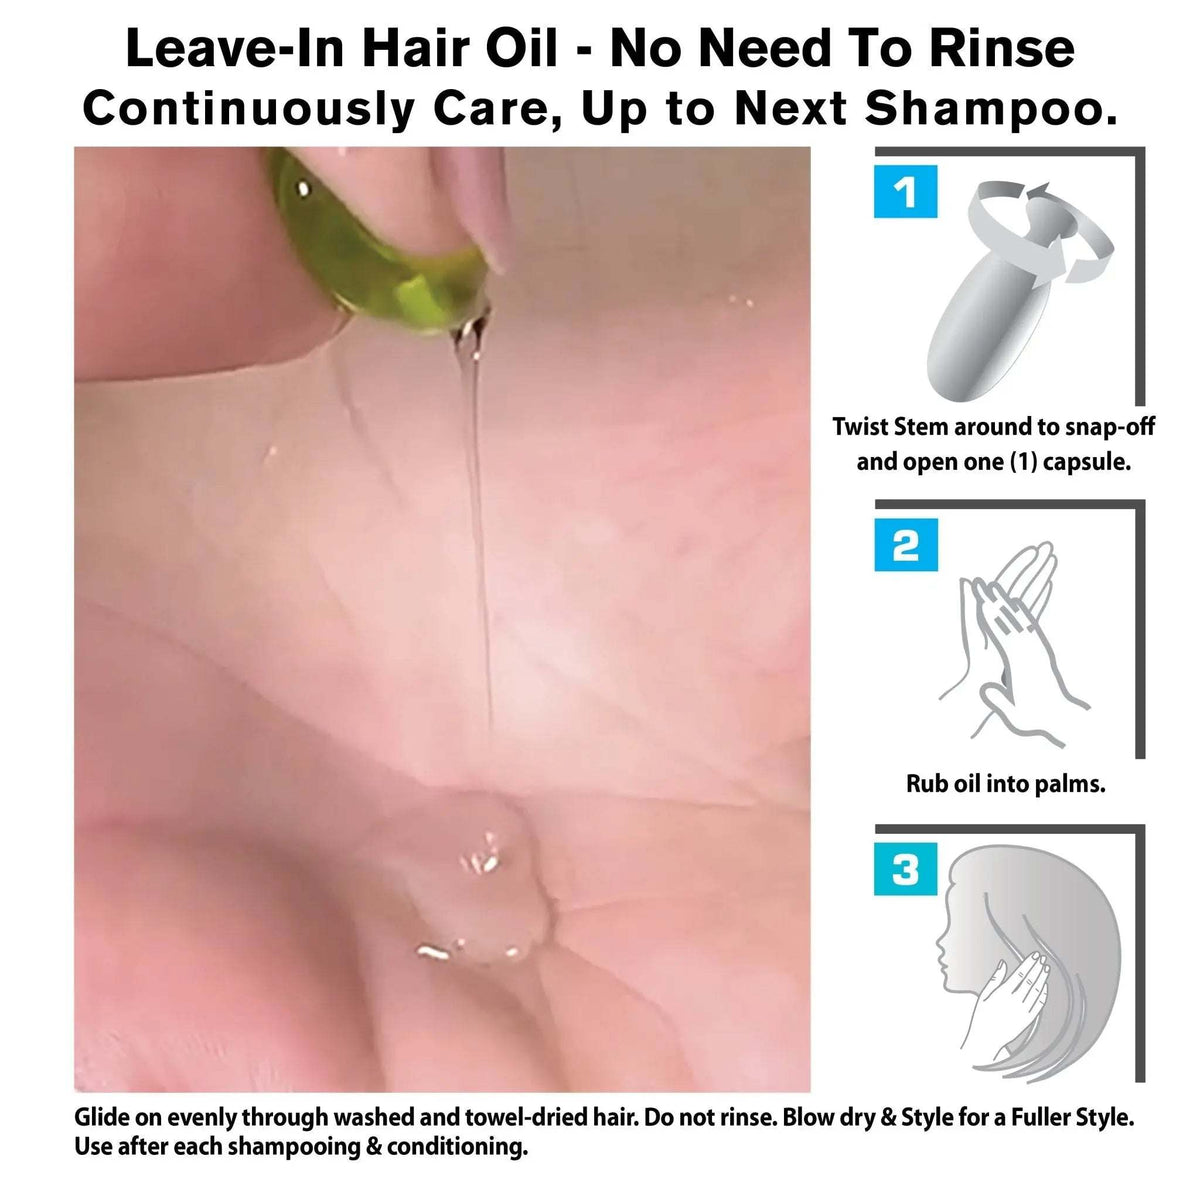 HYDRAMEND Salon Vegan Hair Oil Intense Hydration &amp; Repair